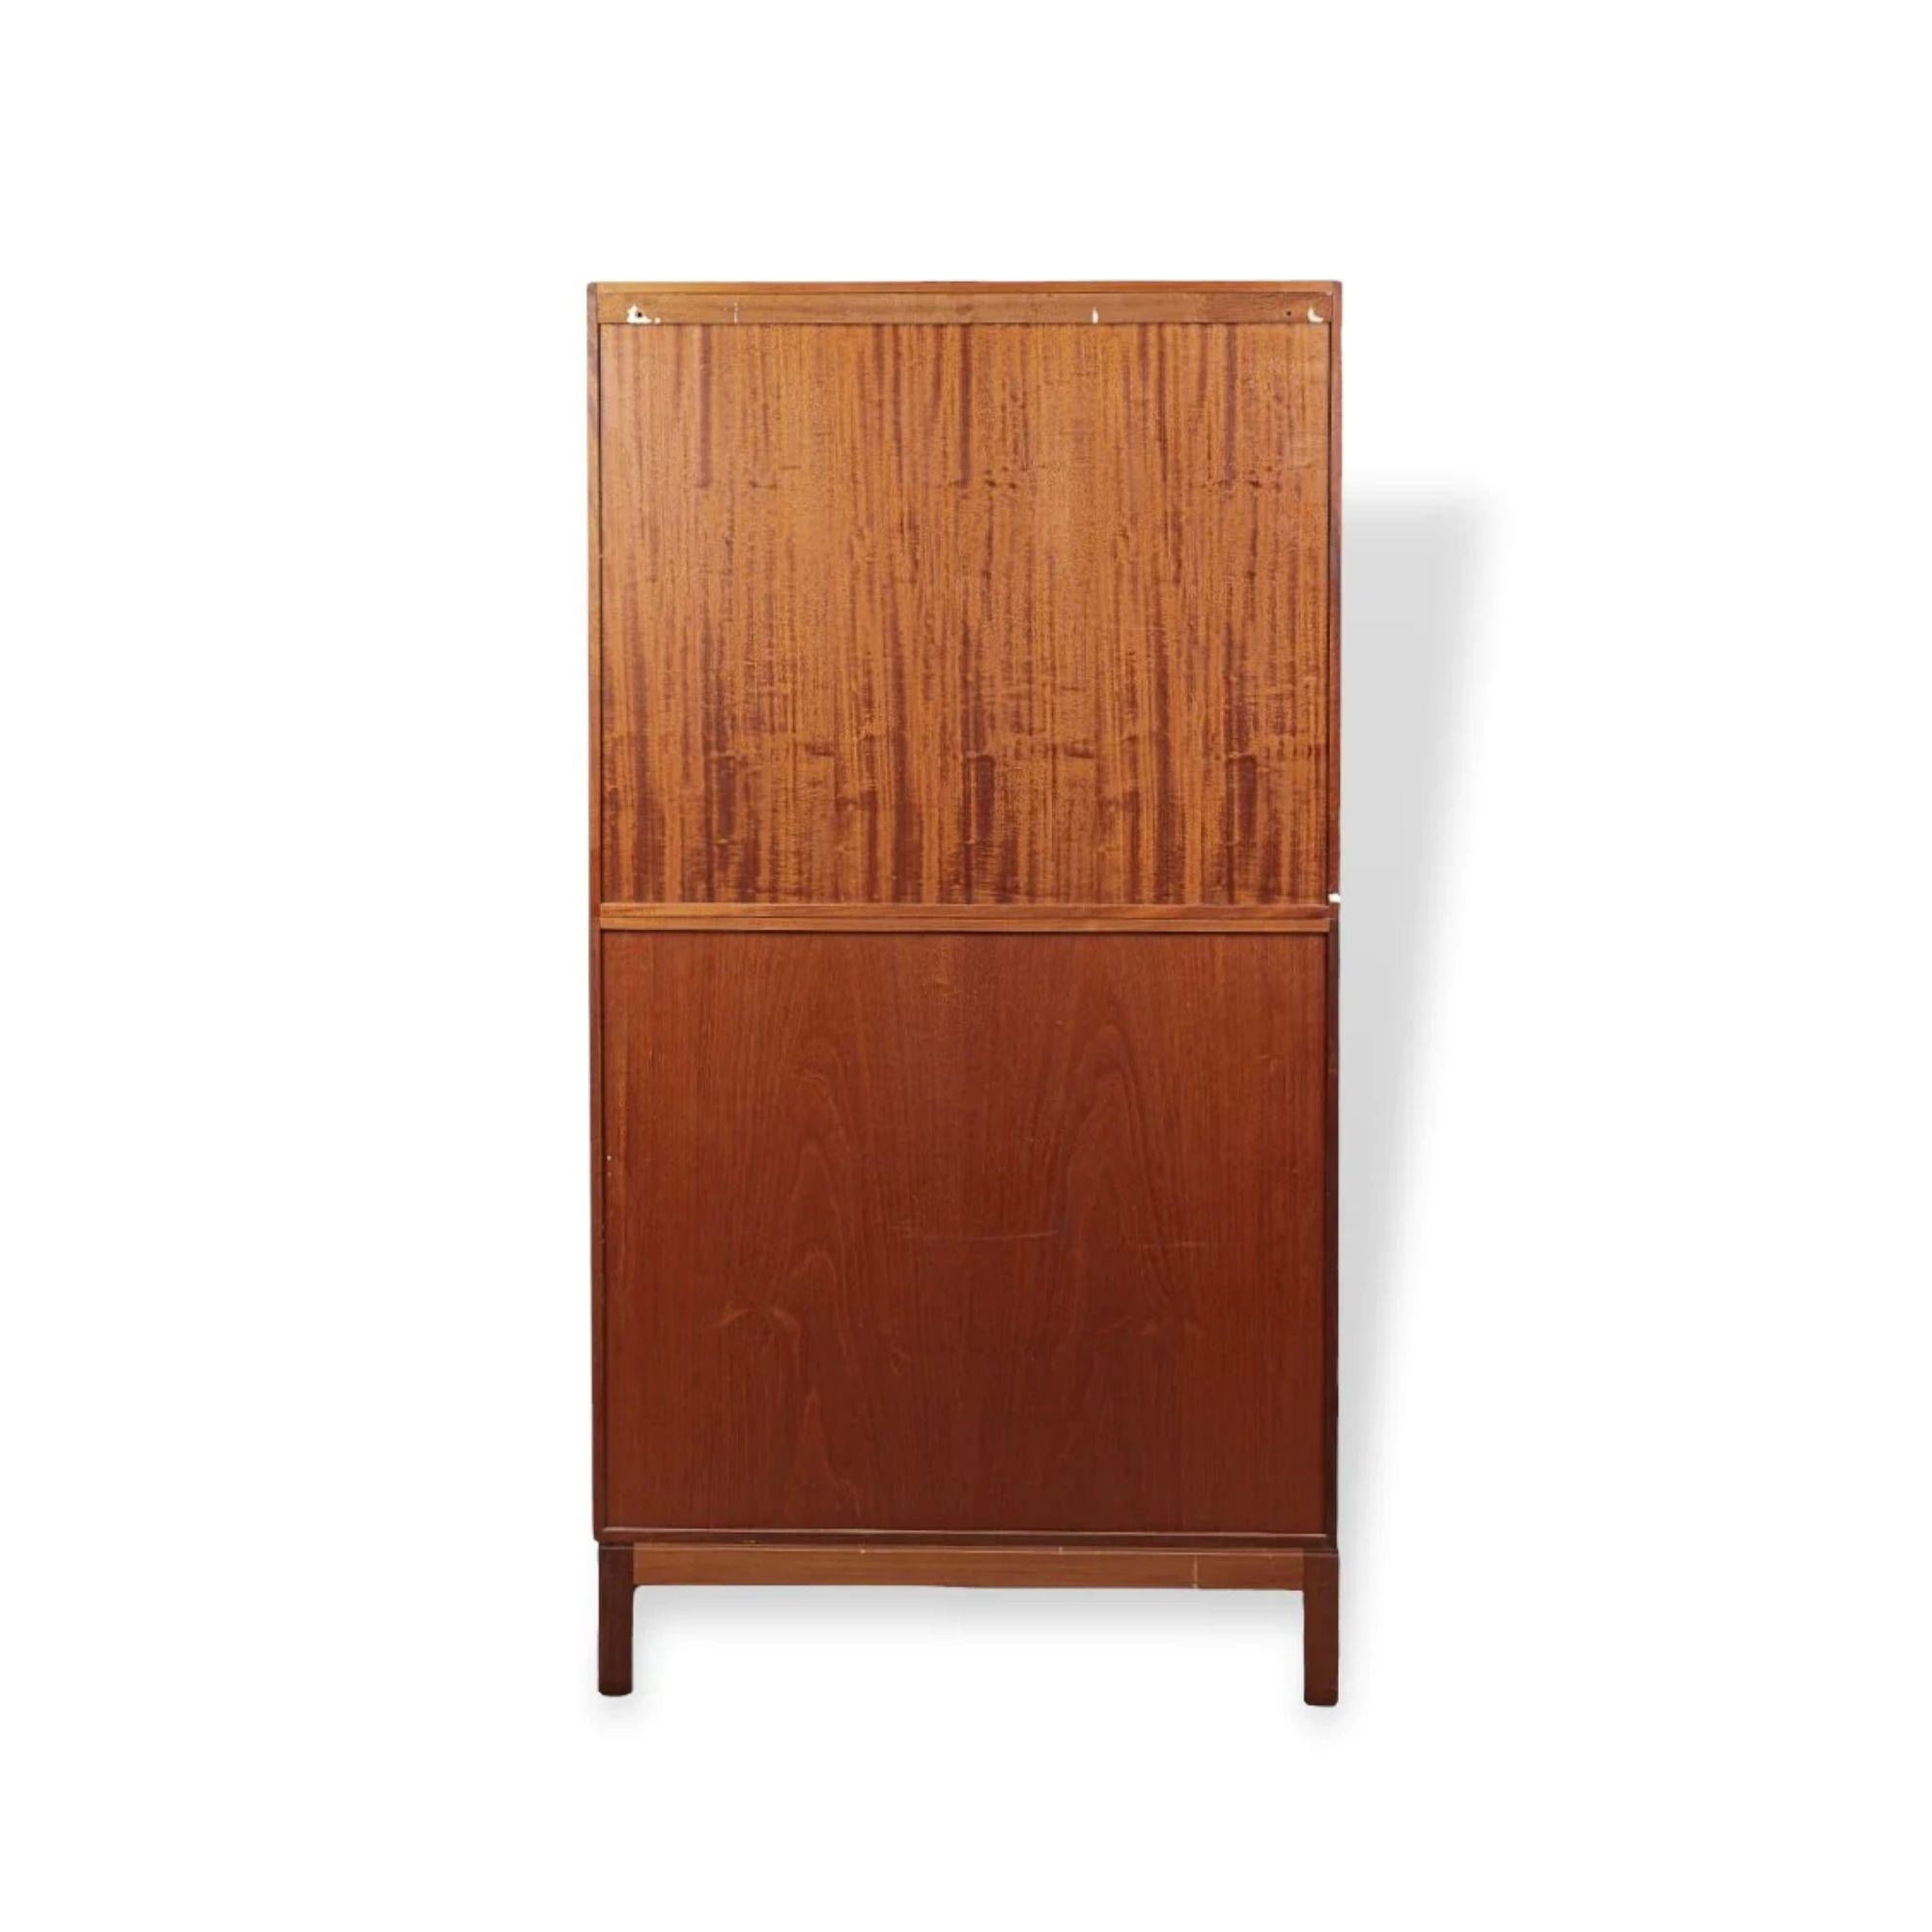 Teak Midcentury Danish Wood Storage Cabinets with Glass Doors & File Drawer